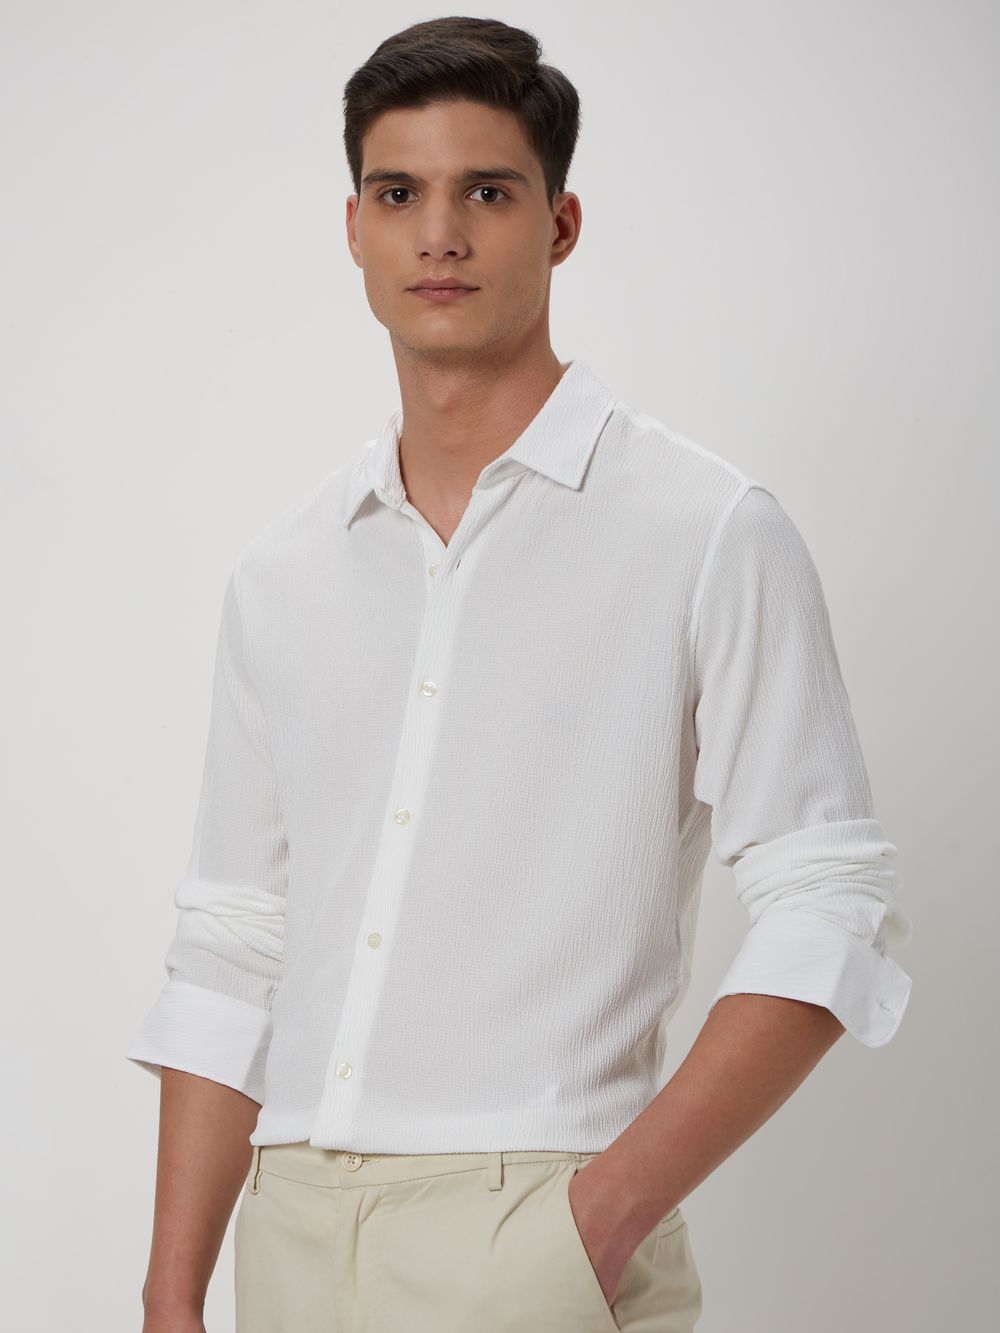 White Textured Plain Stretch Shirt